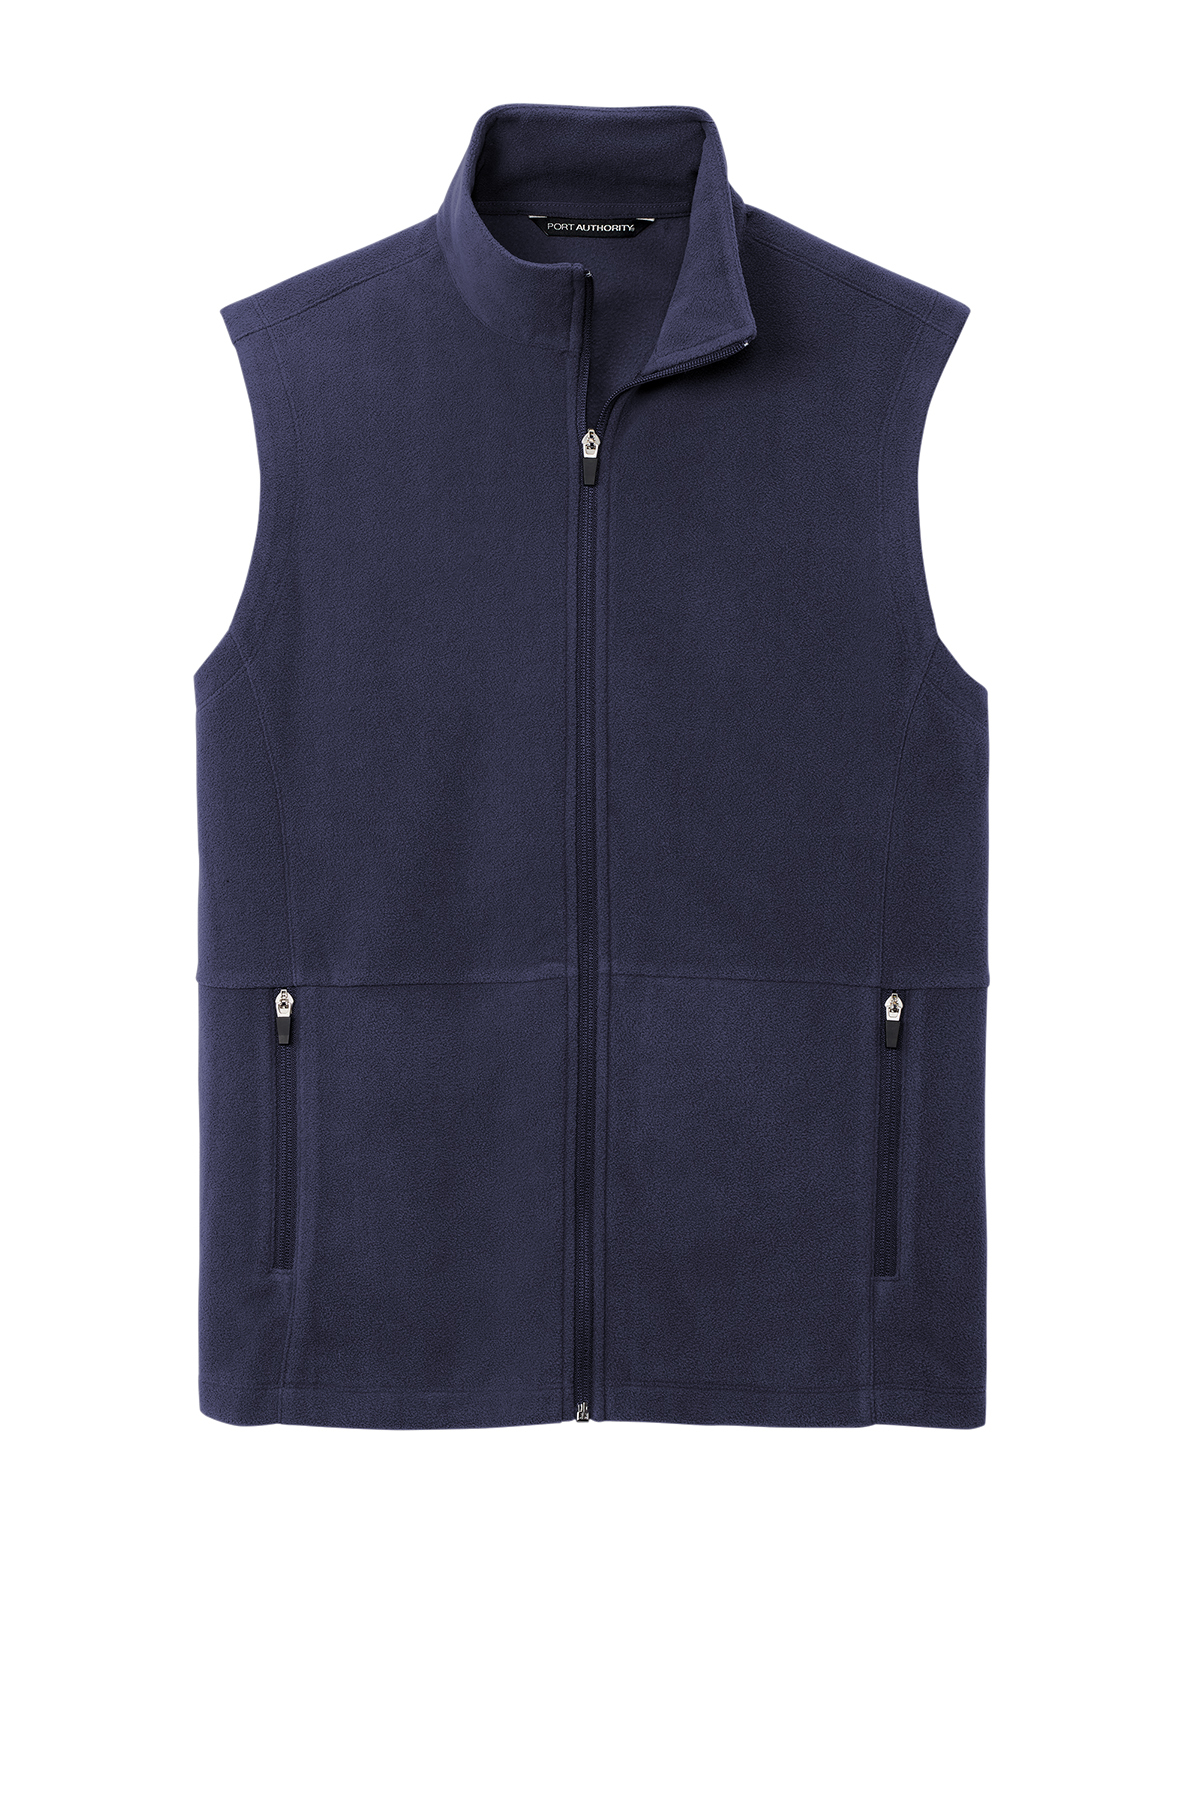 Port Authority Accord Microfleece Vest, Product